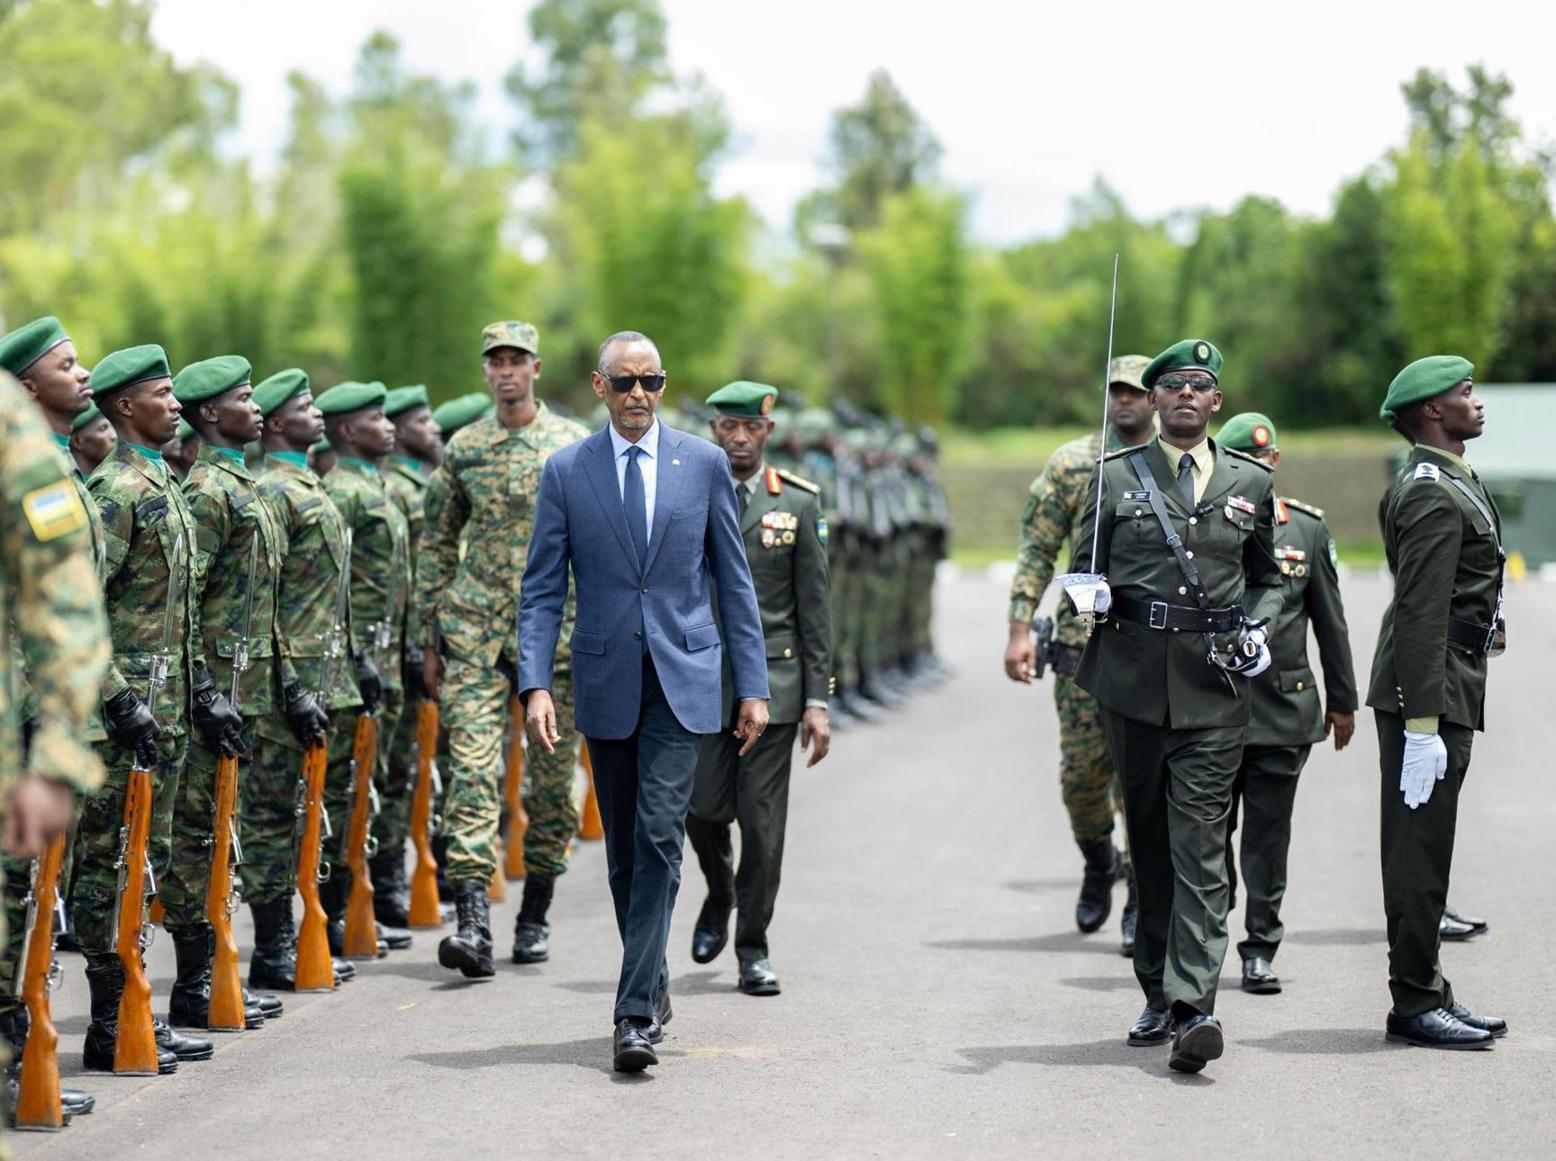 President Kagame Tasks New RDF Officers To Make Whoever Attacks Rwanda ‘Regret’